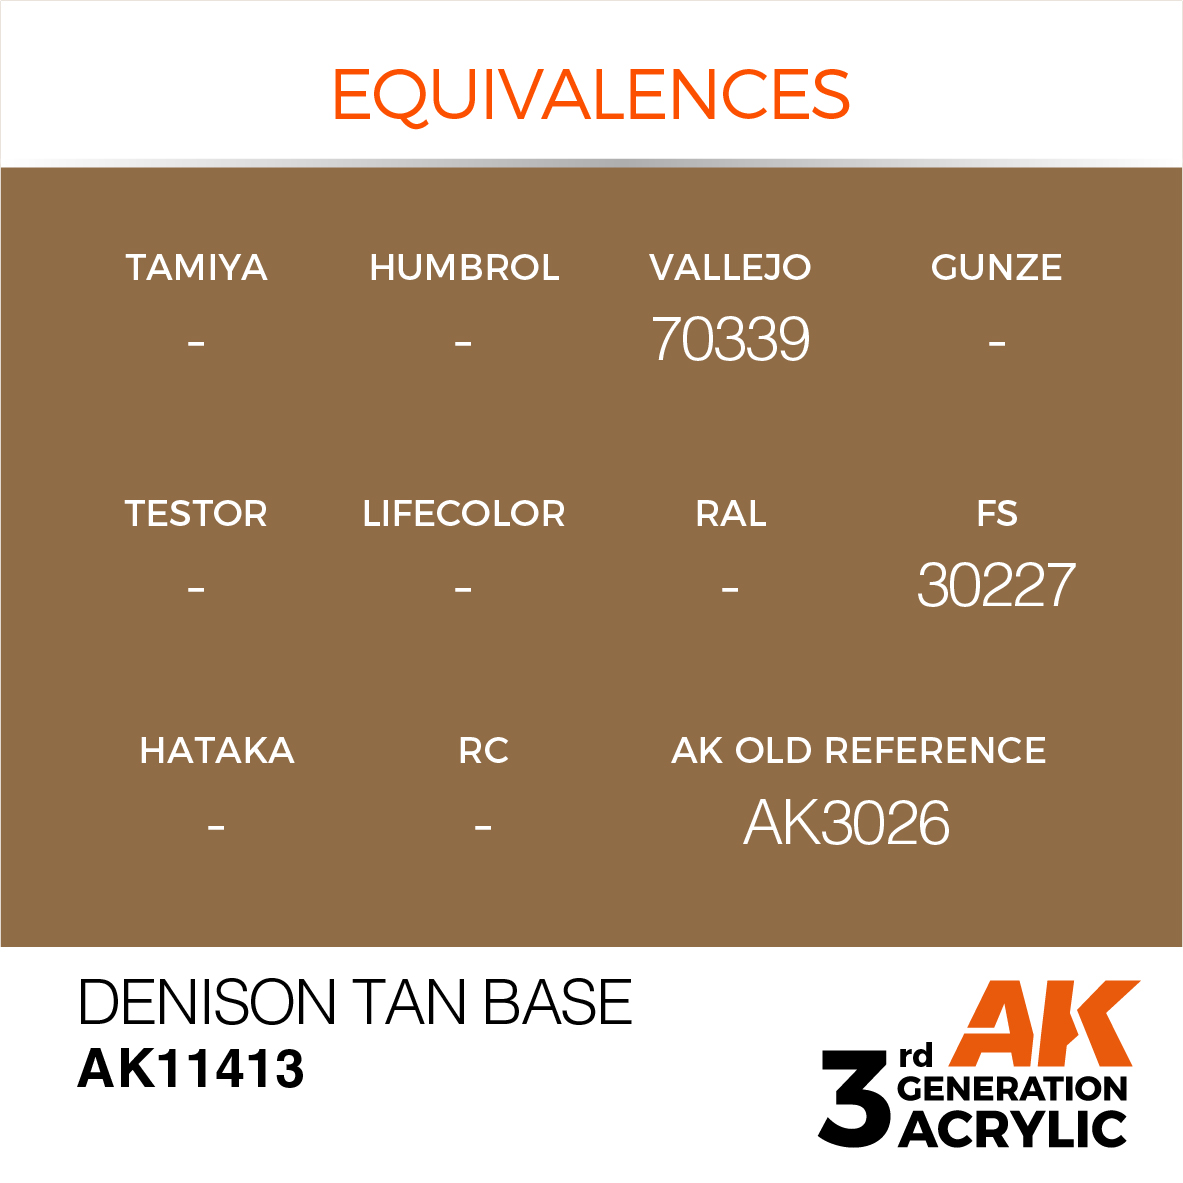 Denison Tan Base – Figures